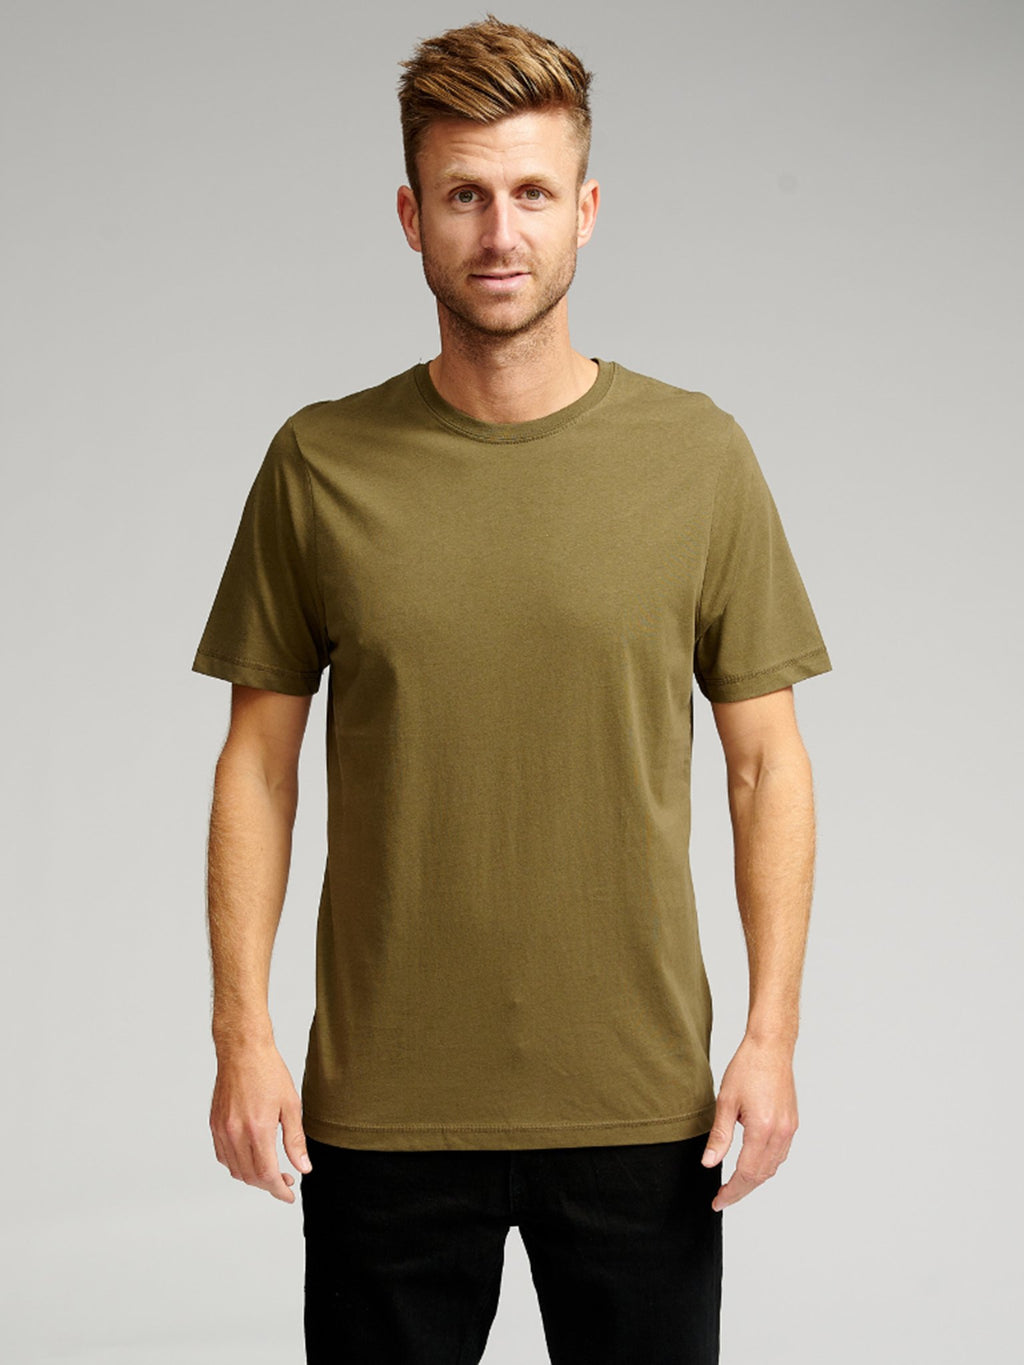 Ecológico Basic Camisetas - Paquete (9 unidades) (FB)